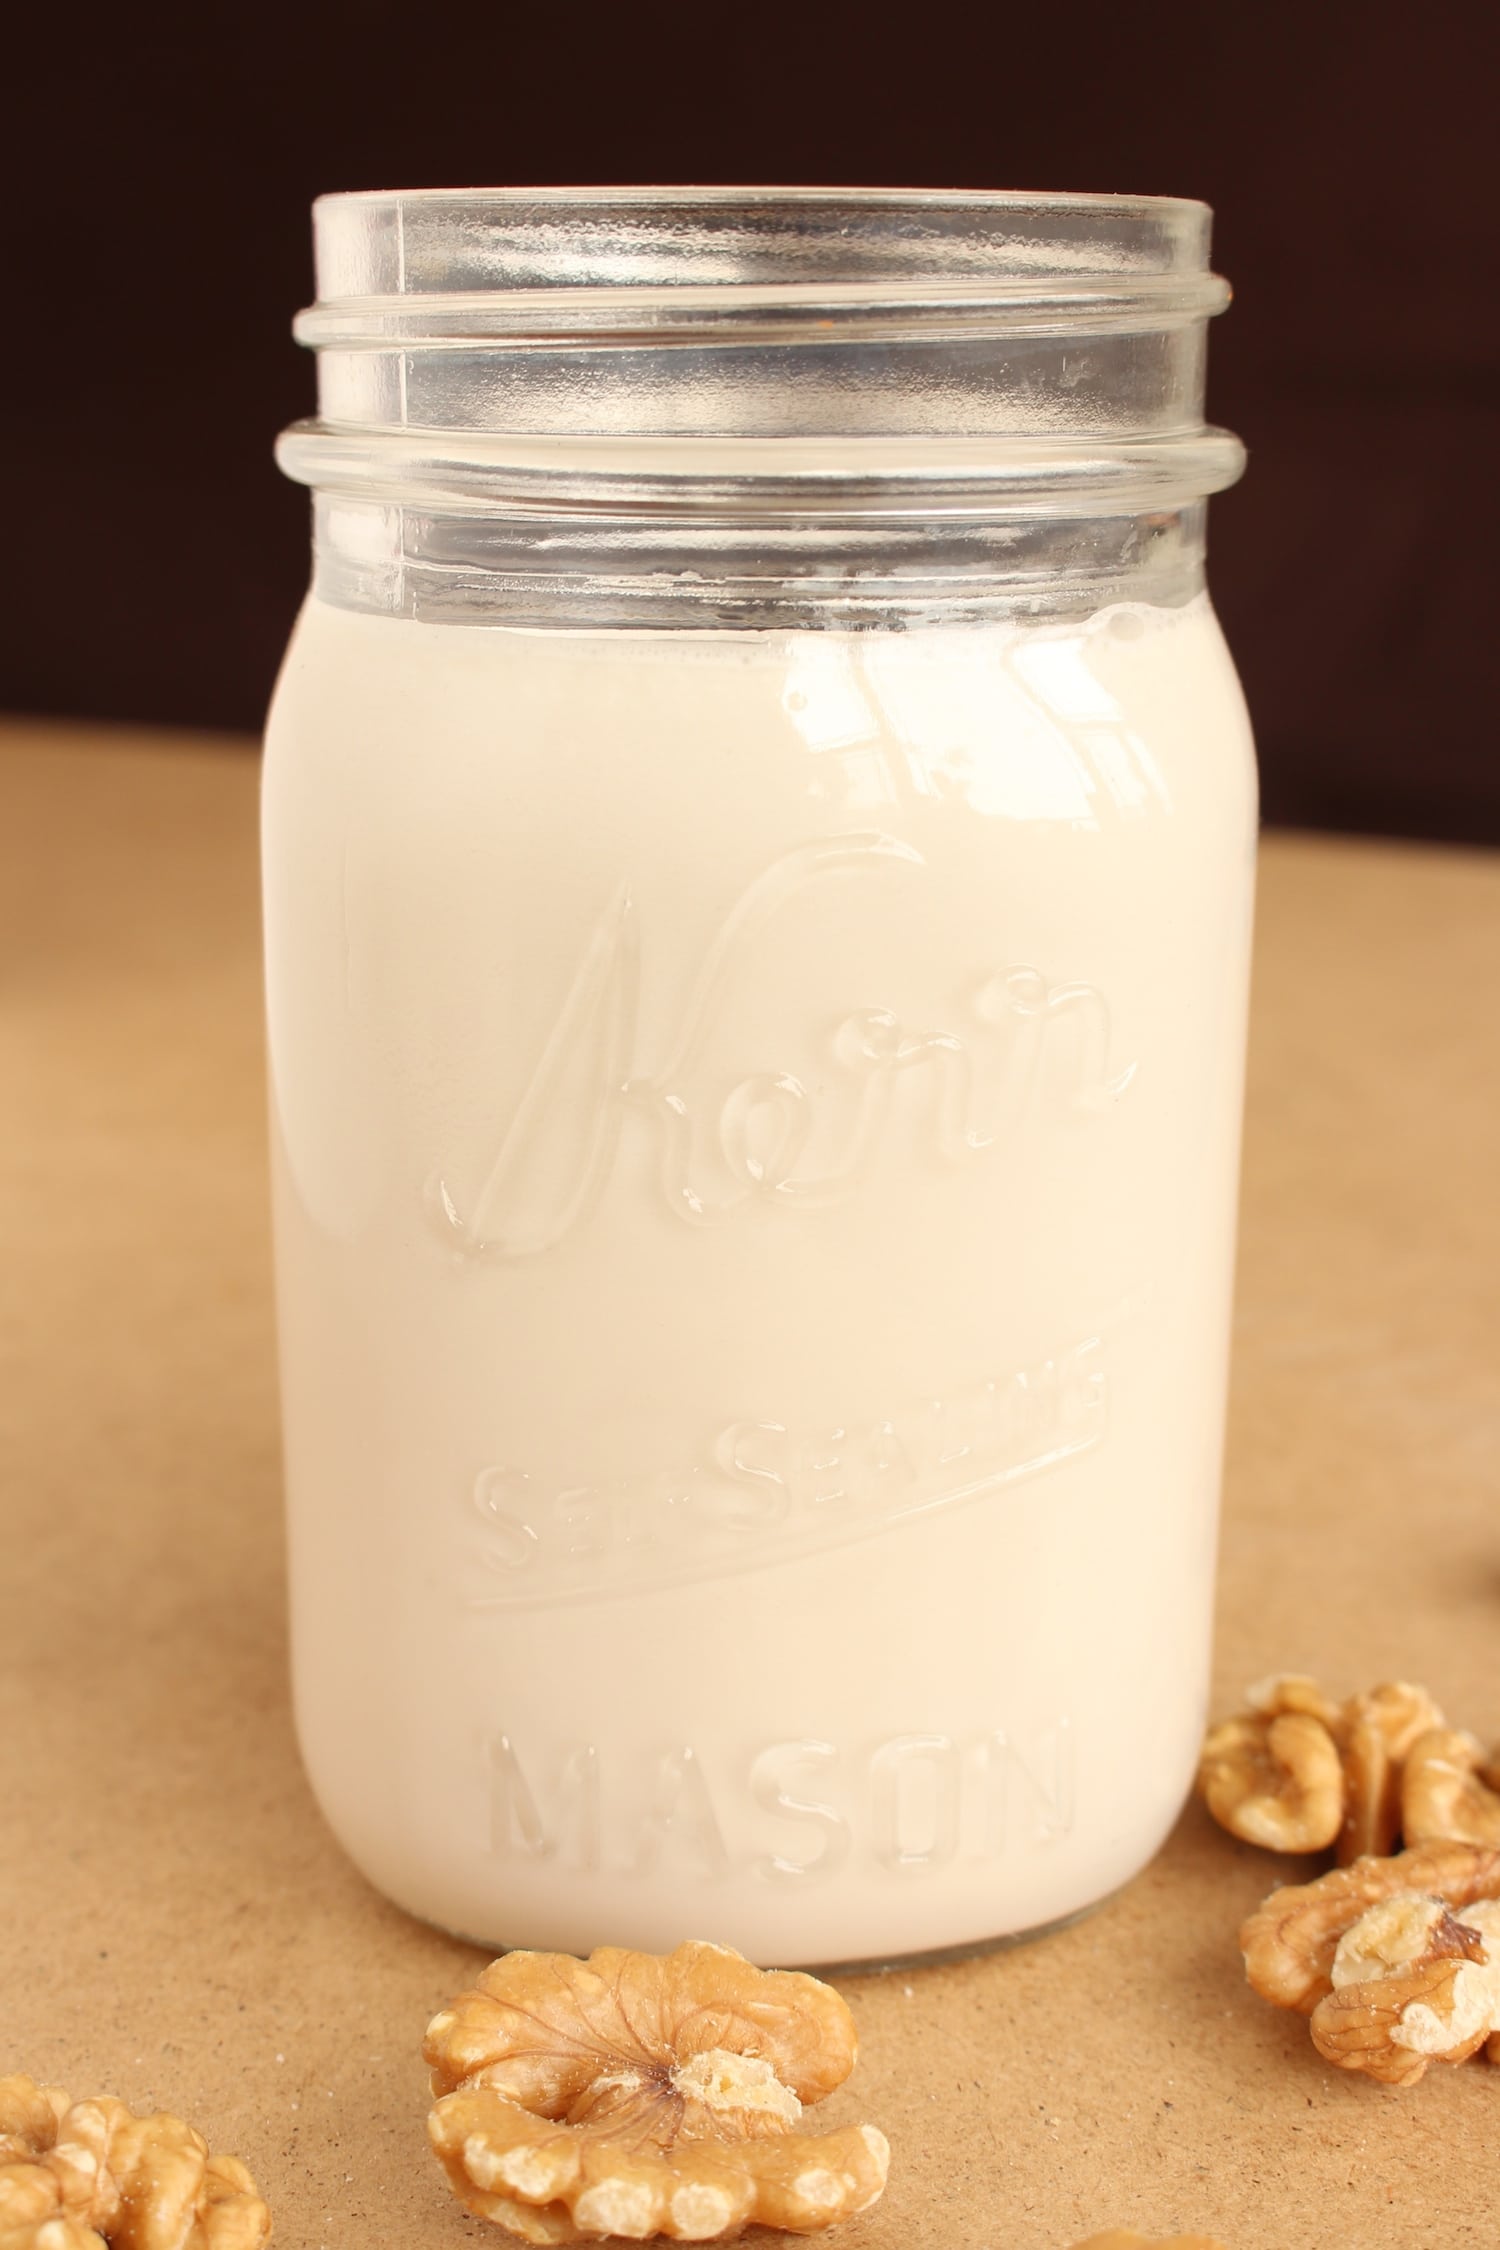 Homemade Walnut Milk in a mason jar